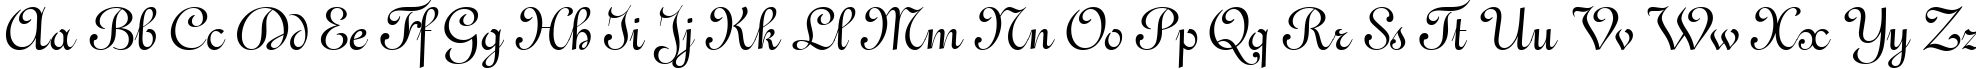 Пример написания английского алфавита шрифтом French 111 BT